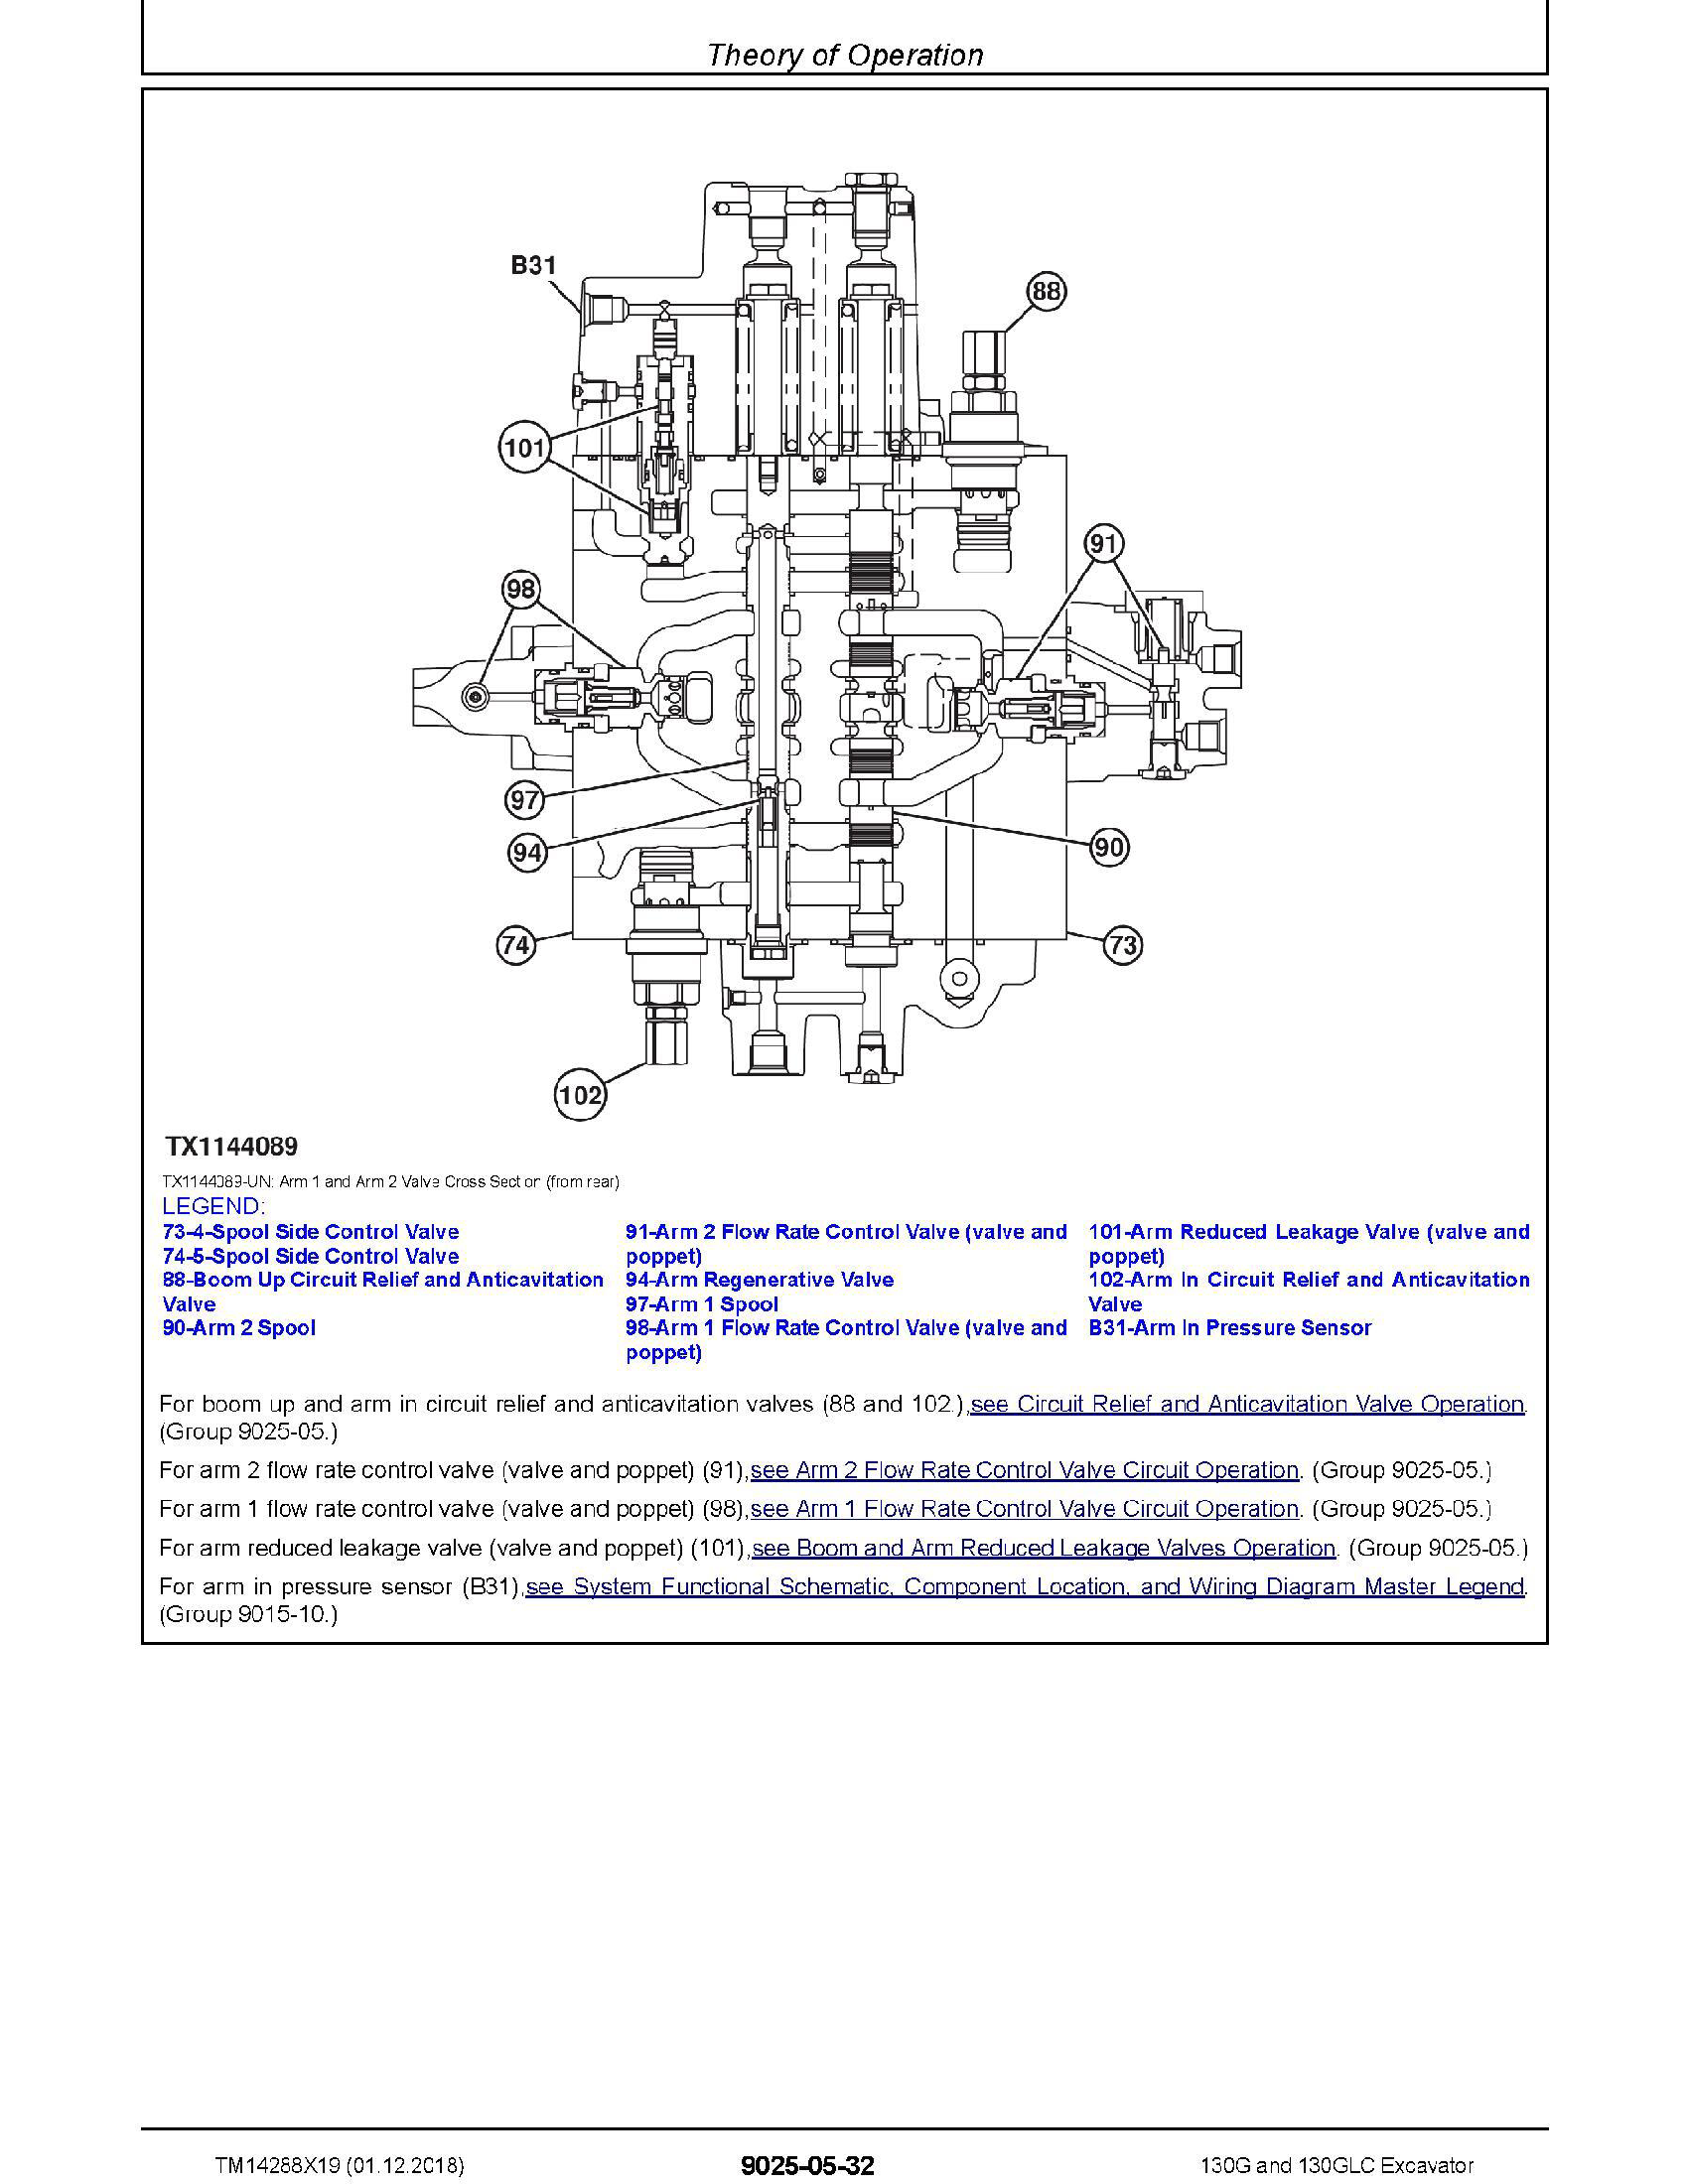 John Deere 2954D manual pdf